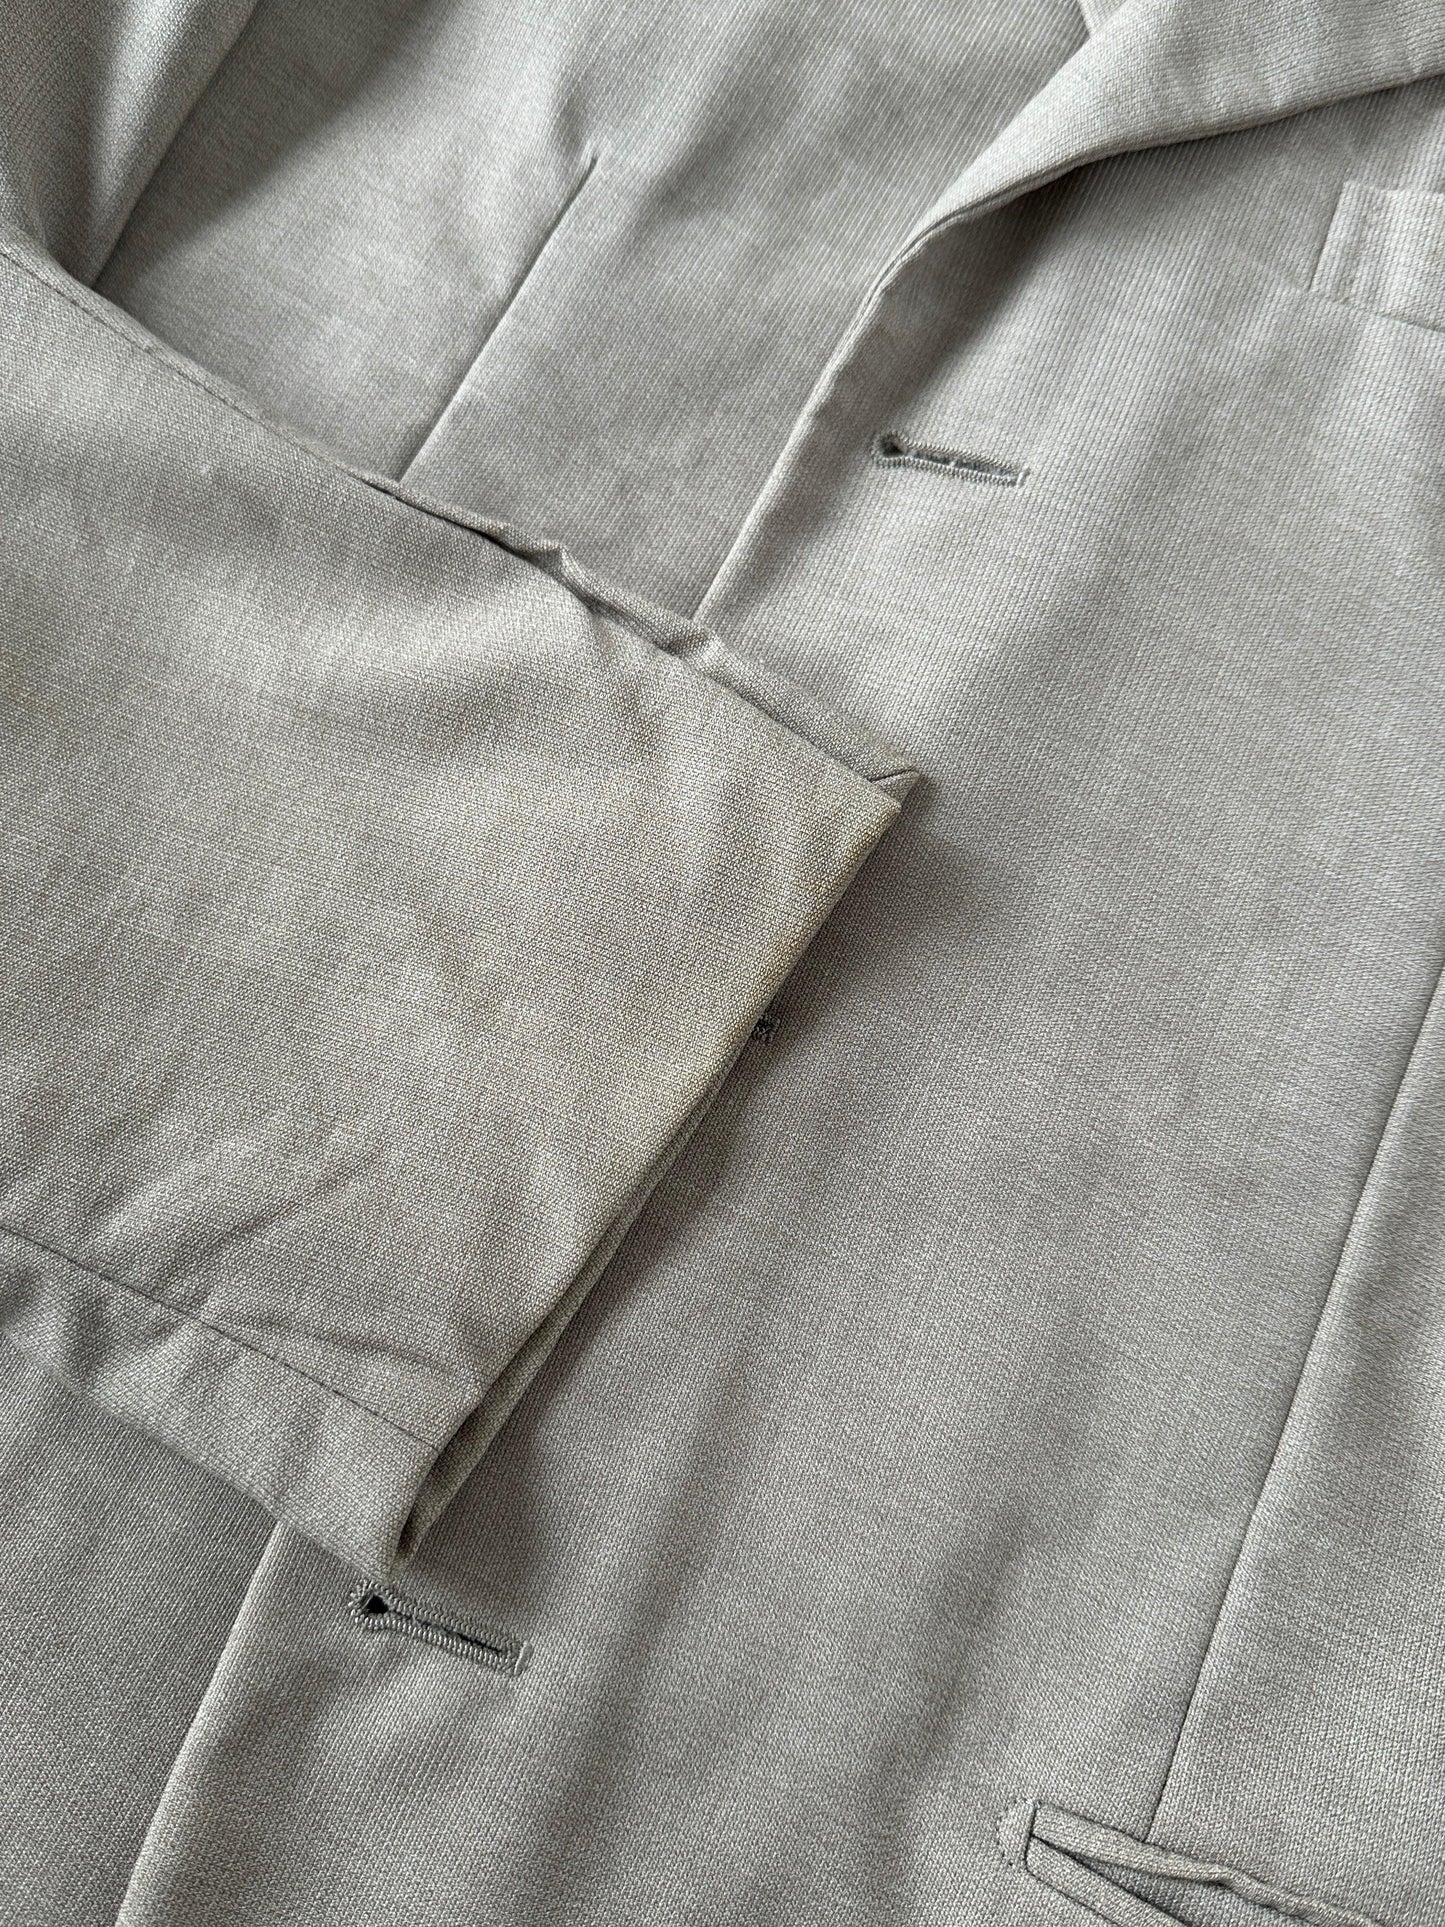 Pal Zileri Italian Vintage Pure Wool Suit - 40R/W32 - Known Source